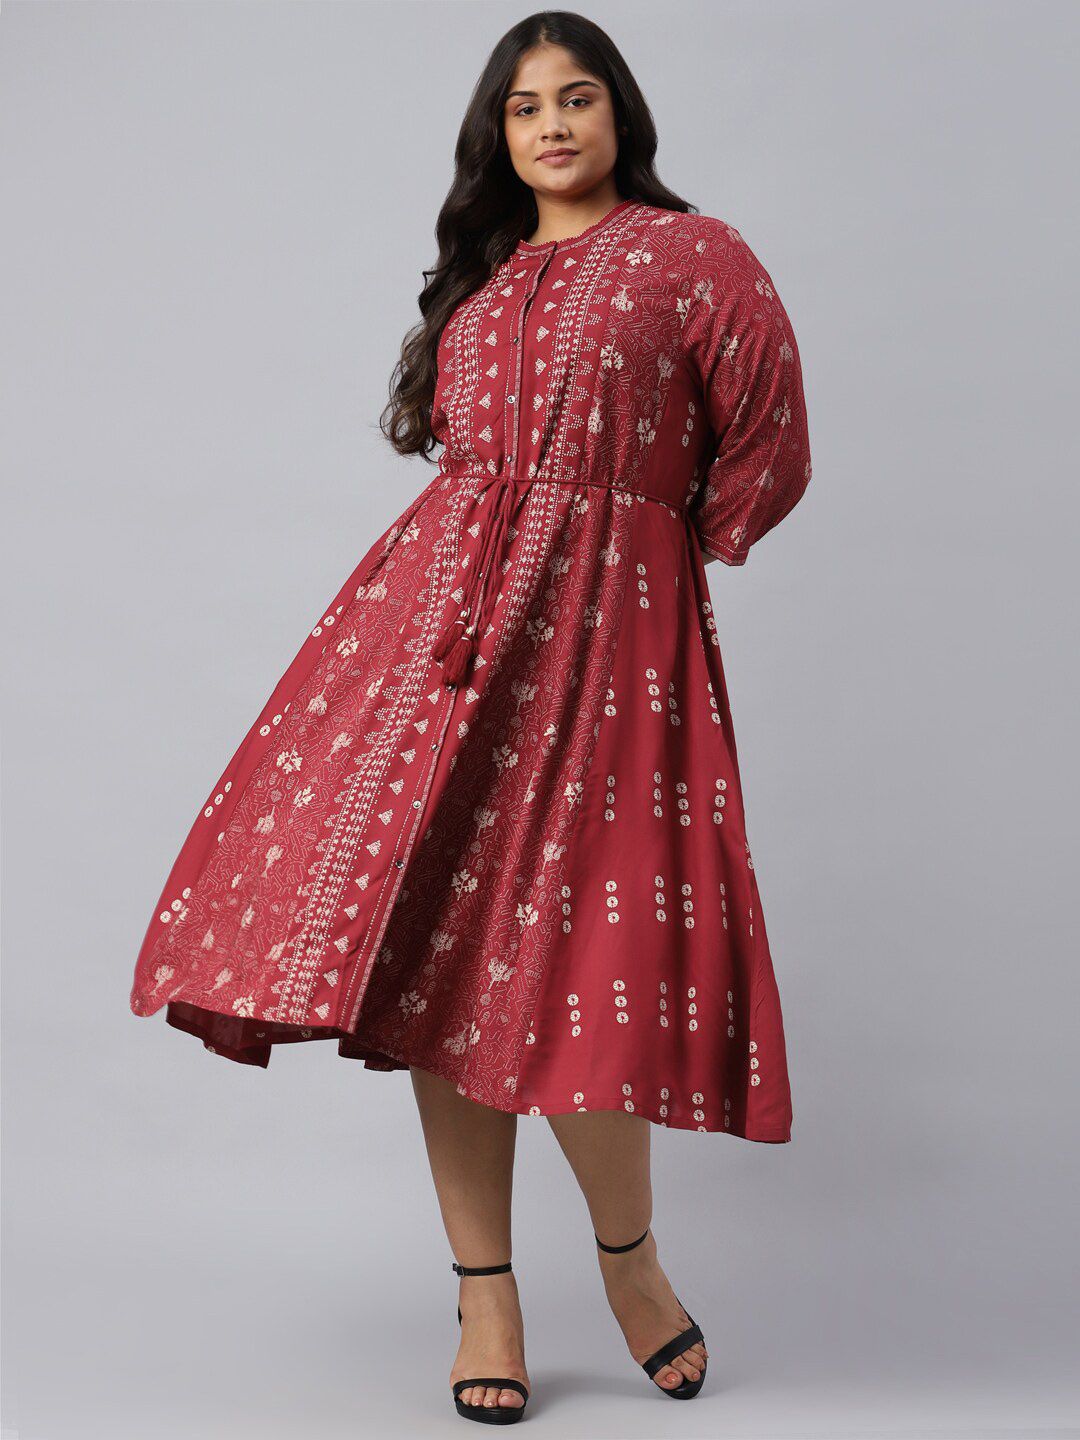 W Red Ethnic Motifs Chiffon A-Line Midi Dress Price in India